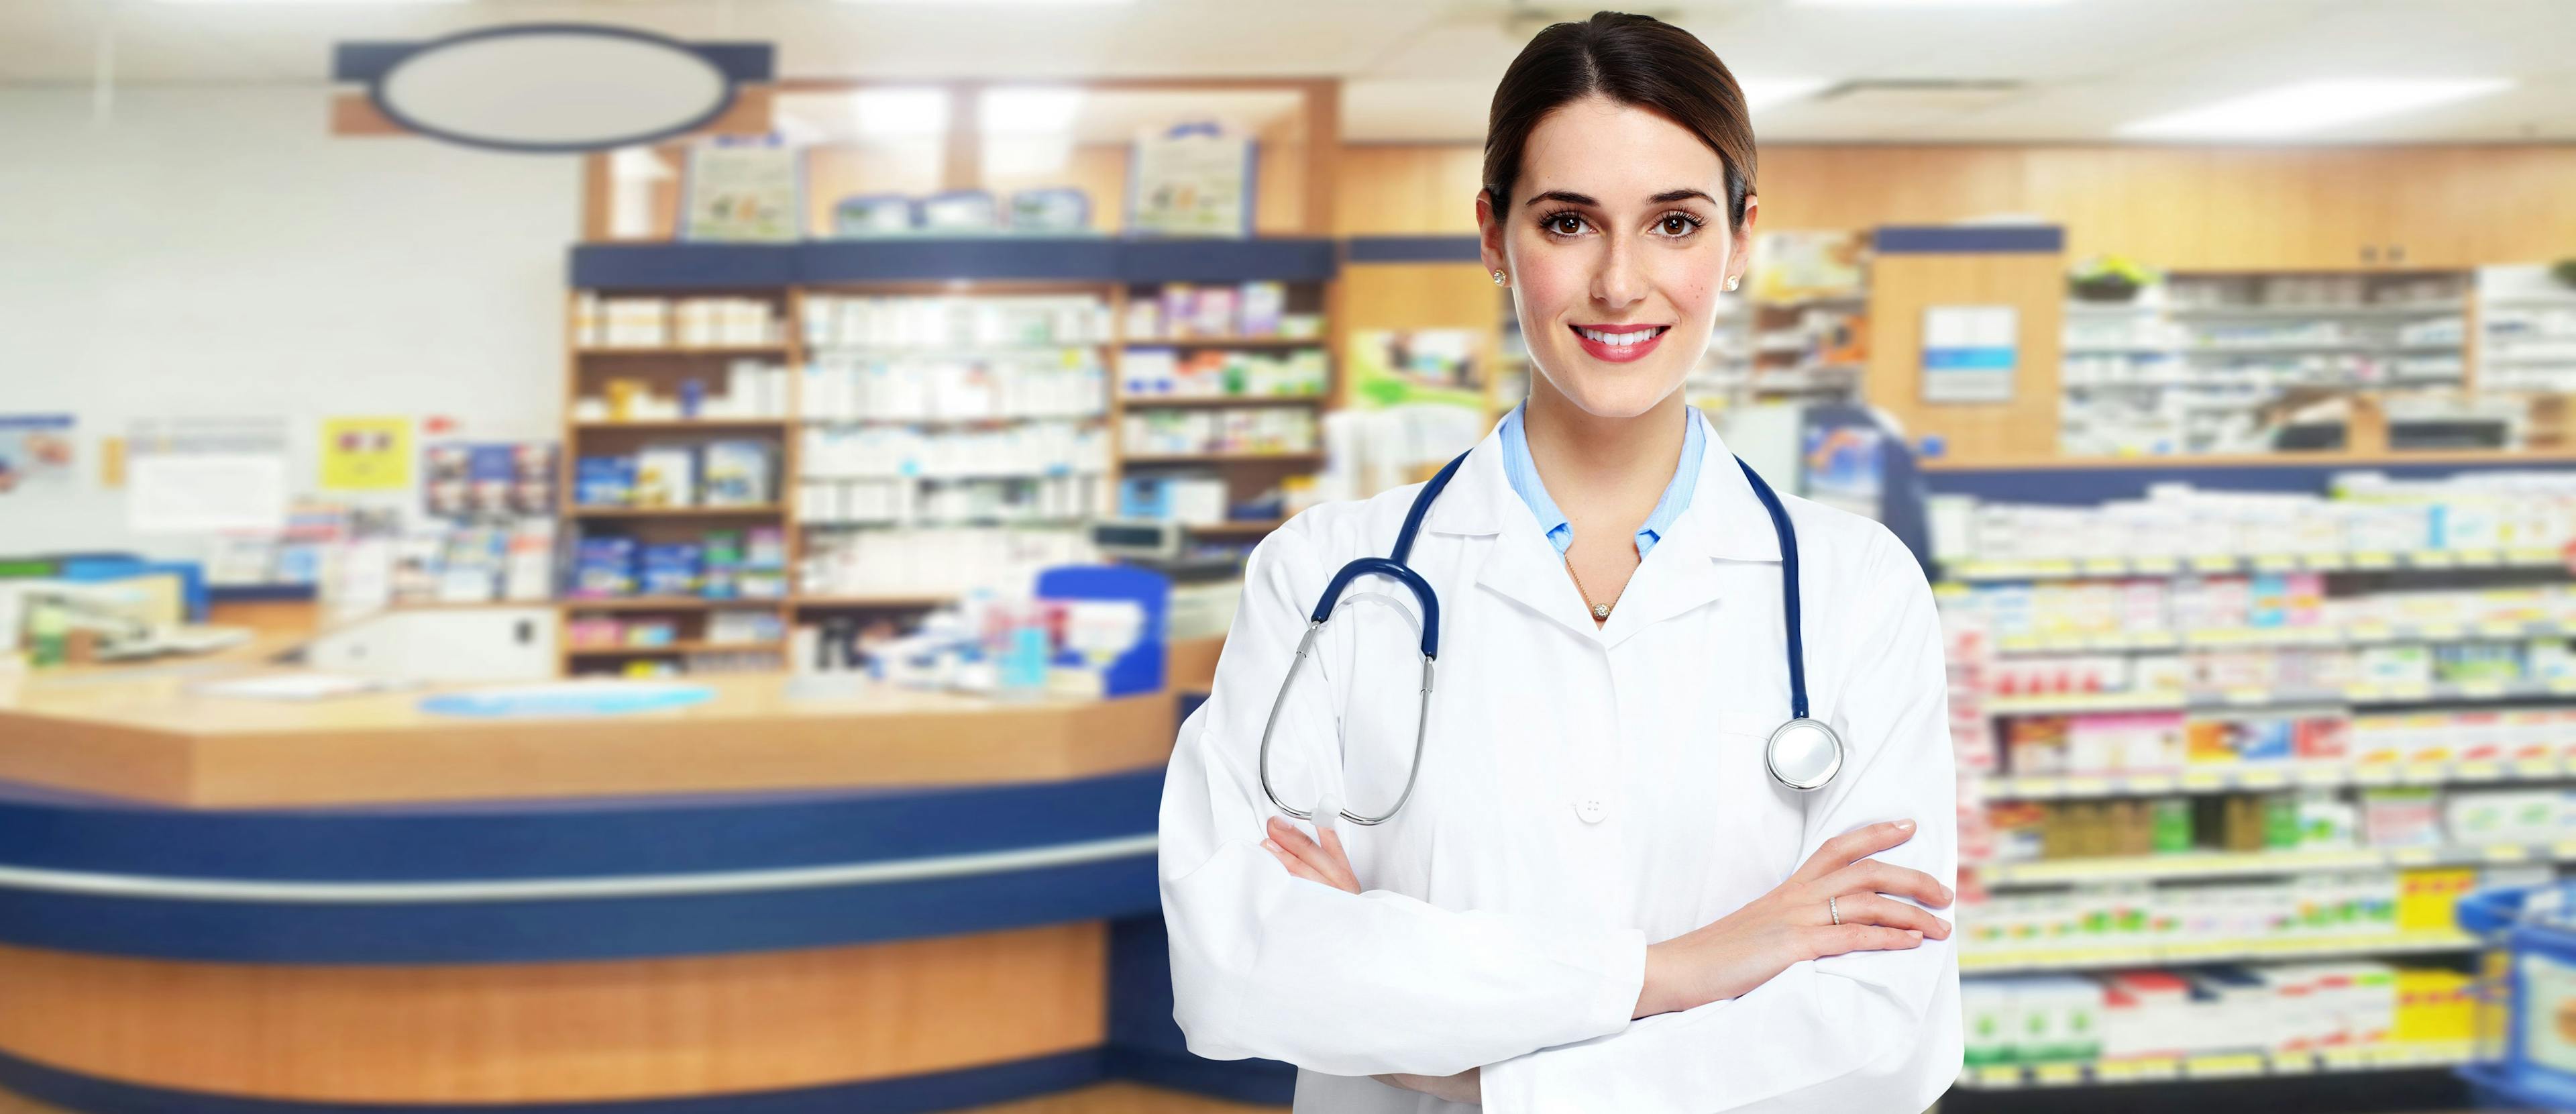 Pharmacy Career Survey Confirms Expanding Pharmacist Roles